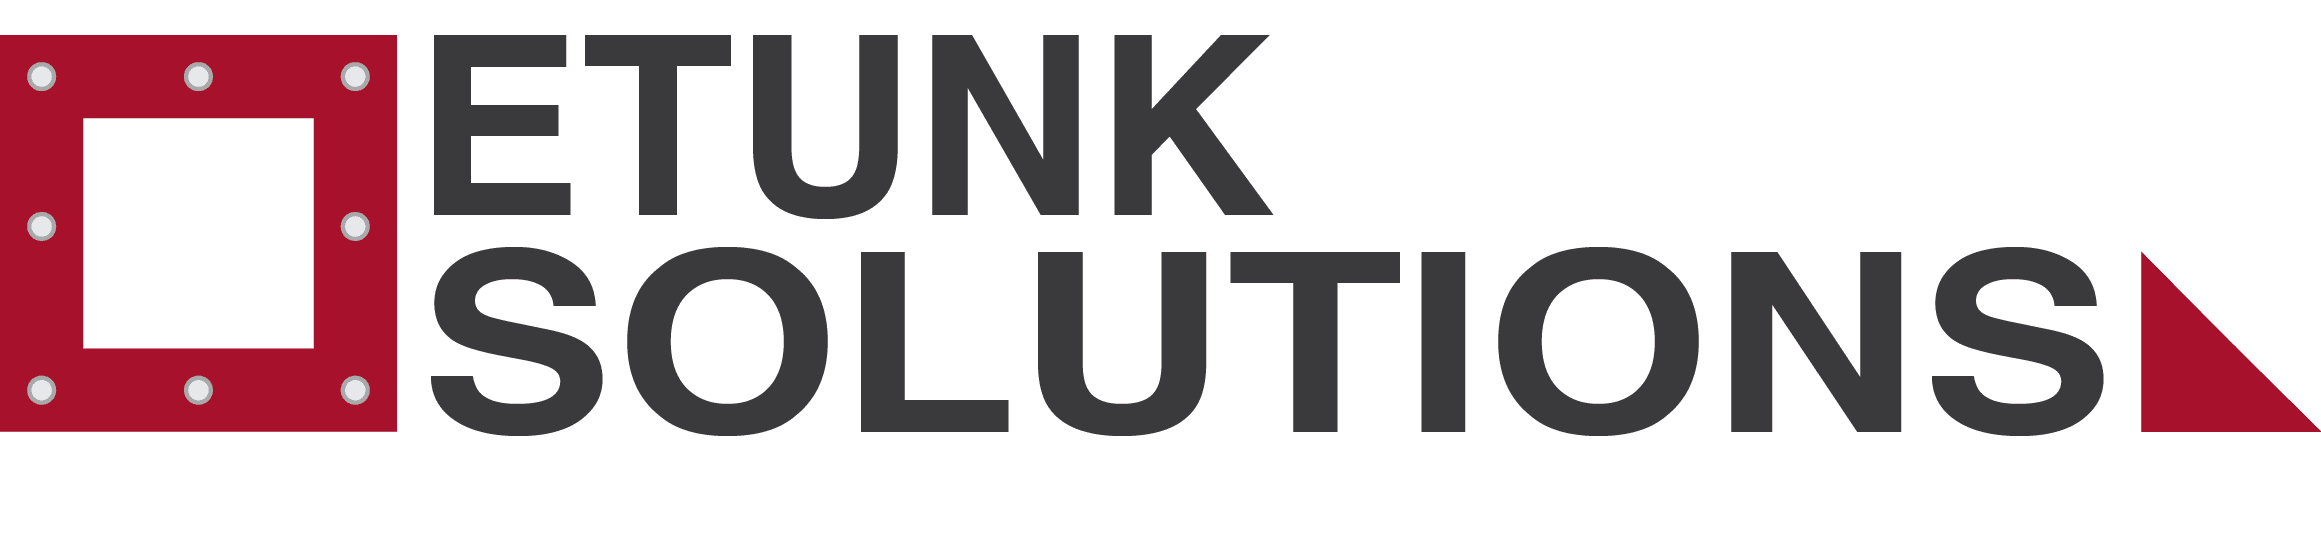 Etunk Solutions